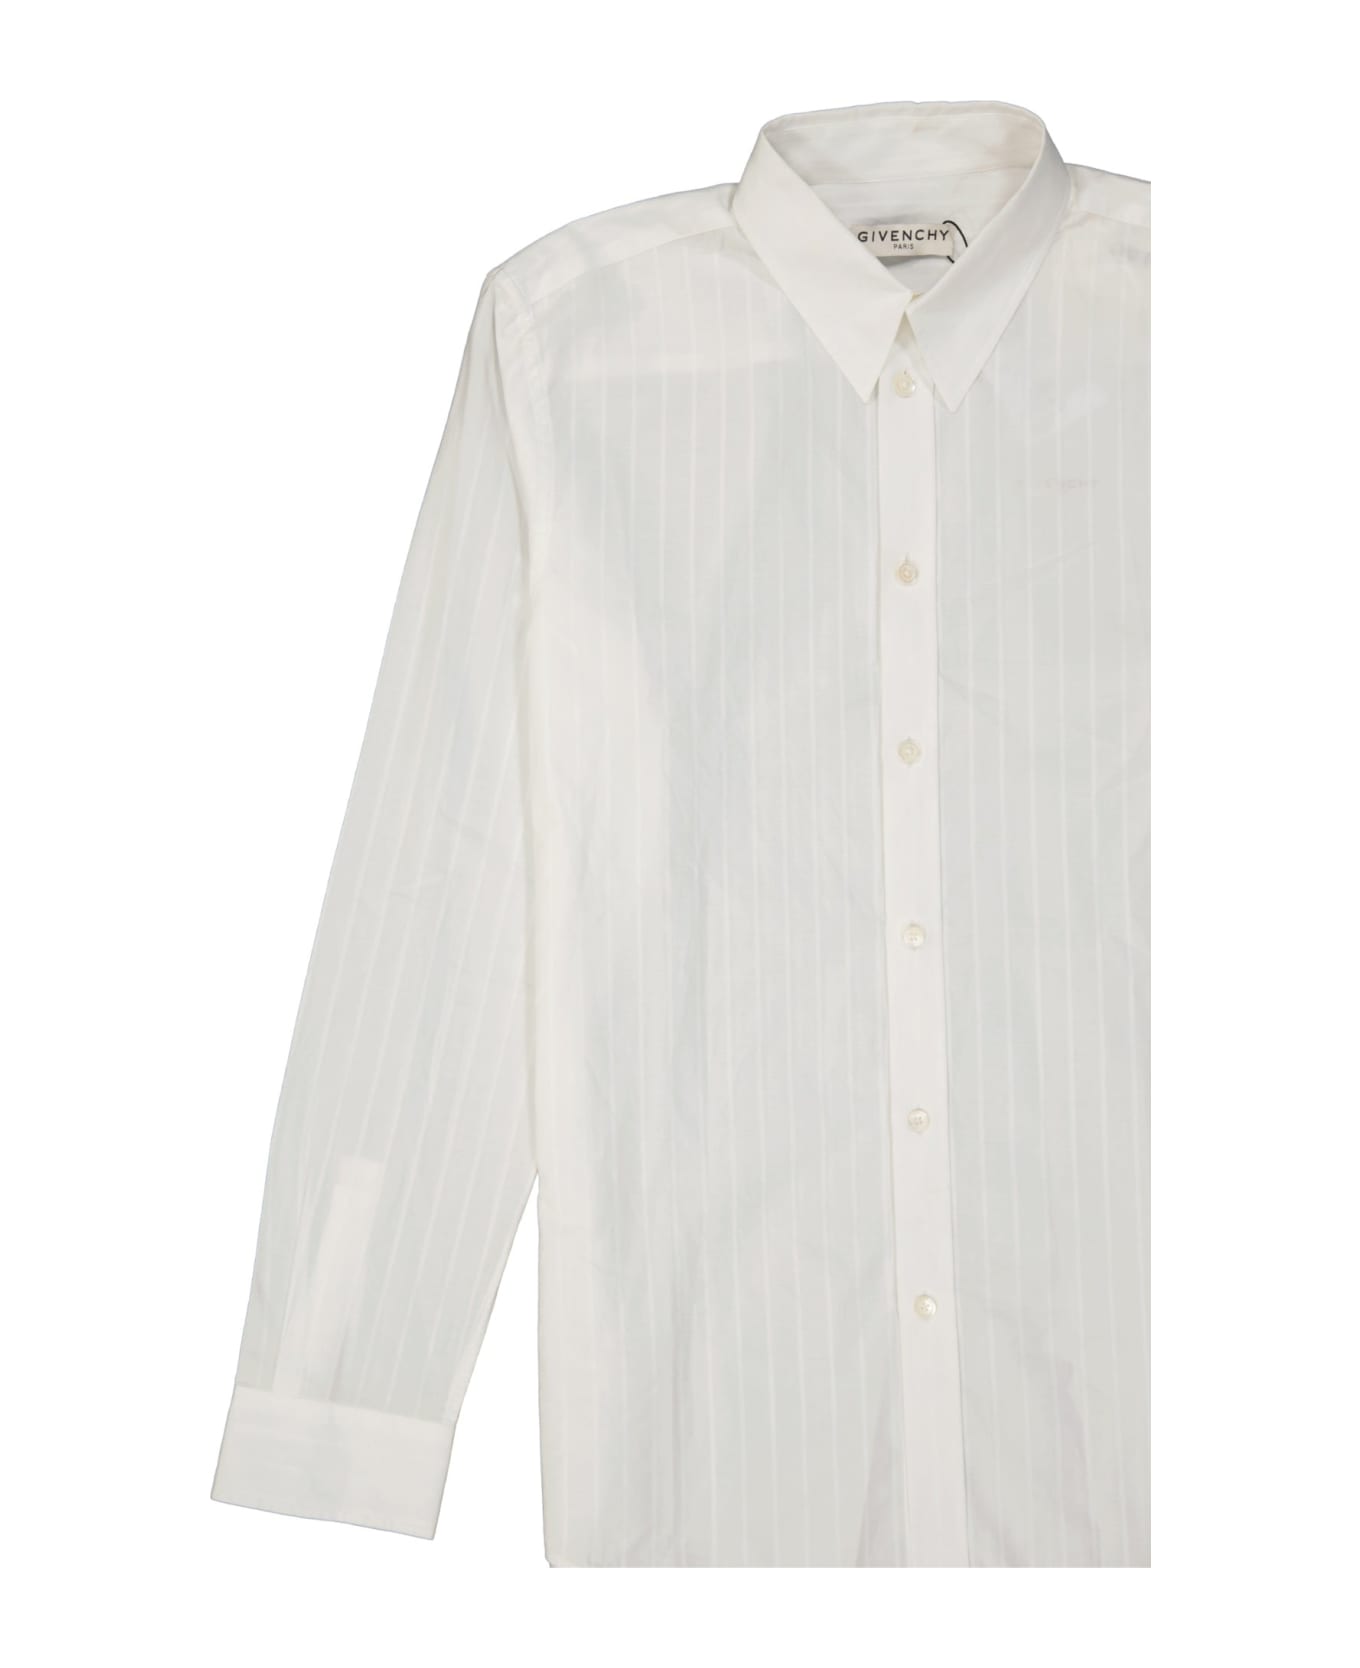 Givenchy Cotton Logo Shirt - White